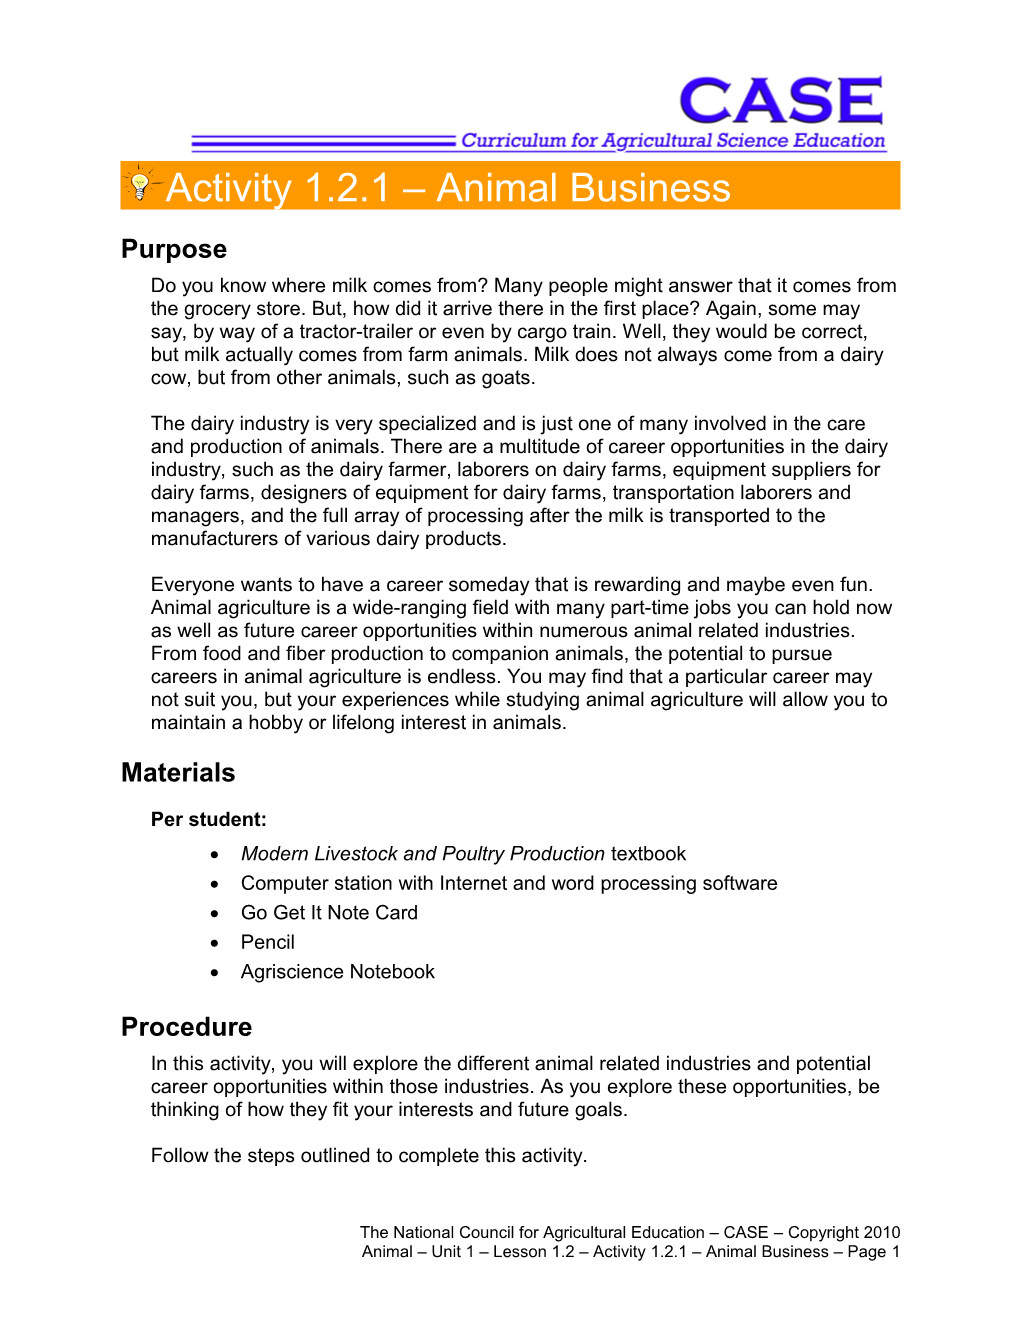 Activity 1.2.1 Animal Business